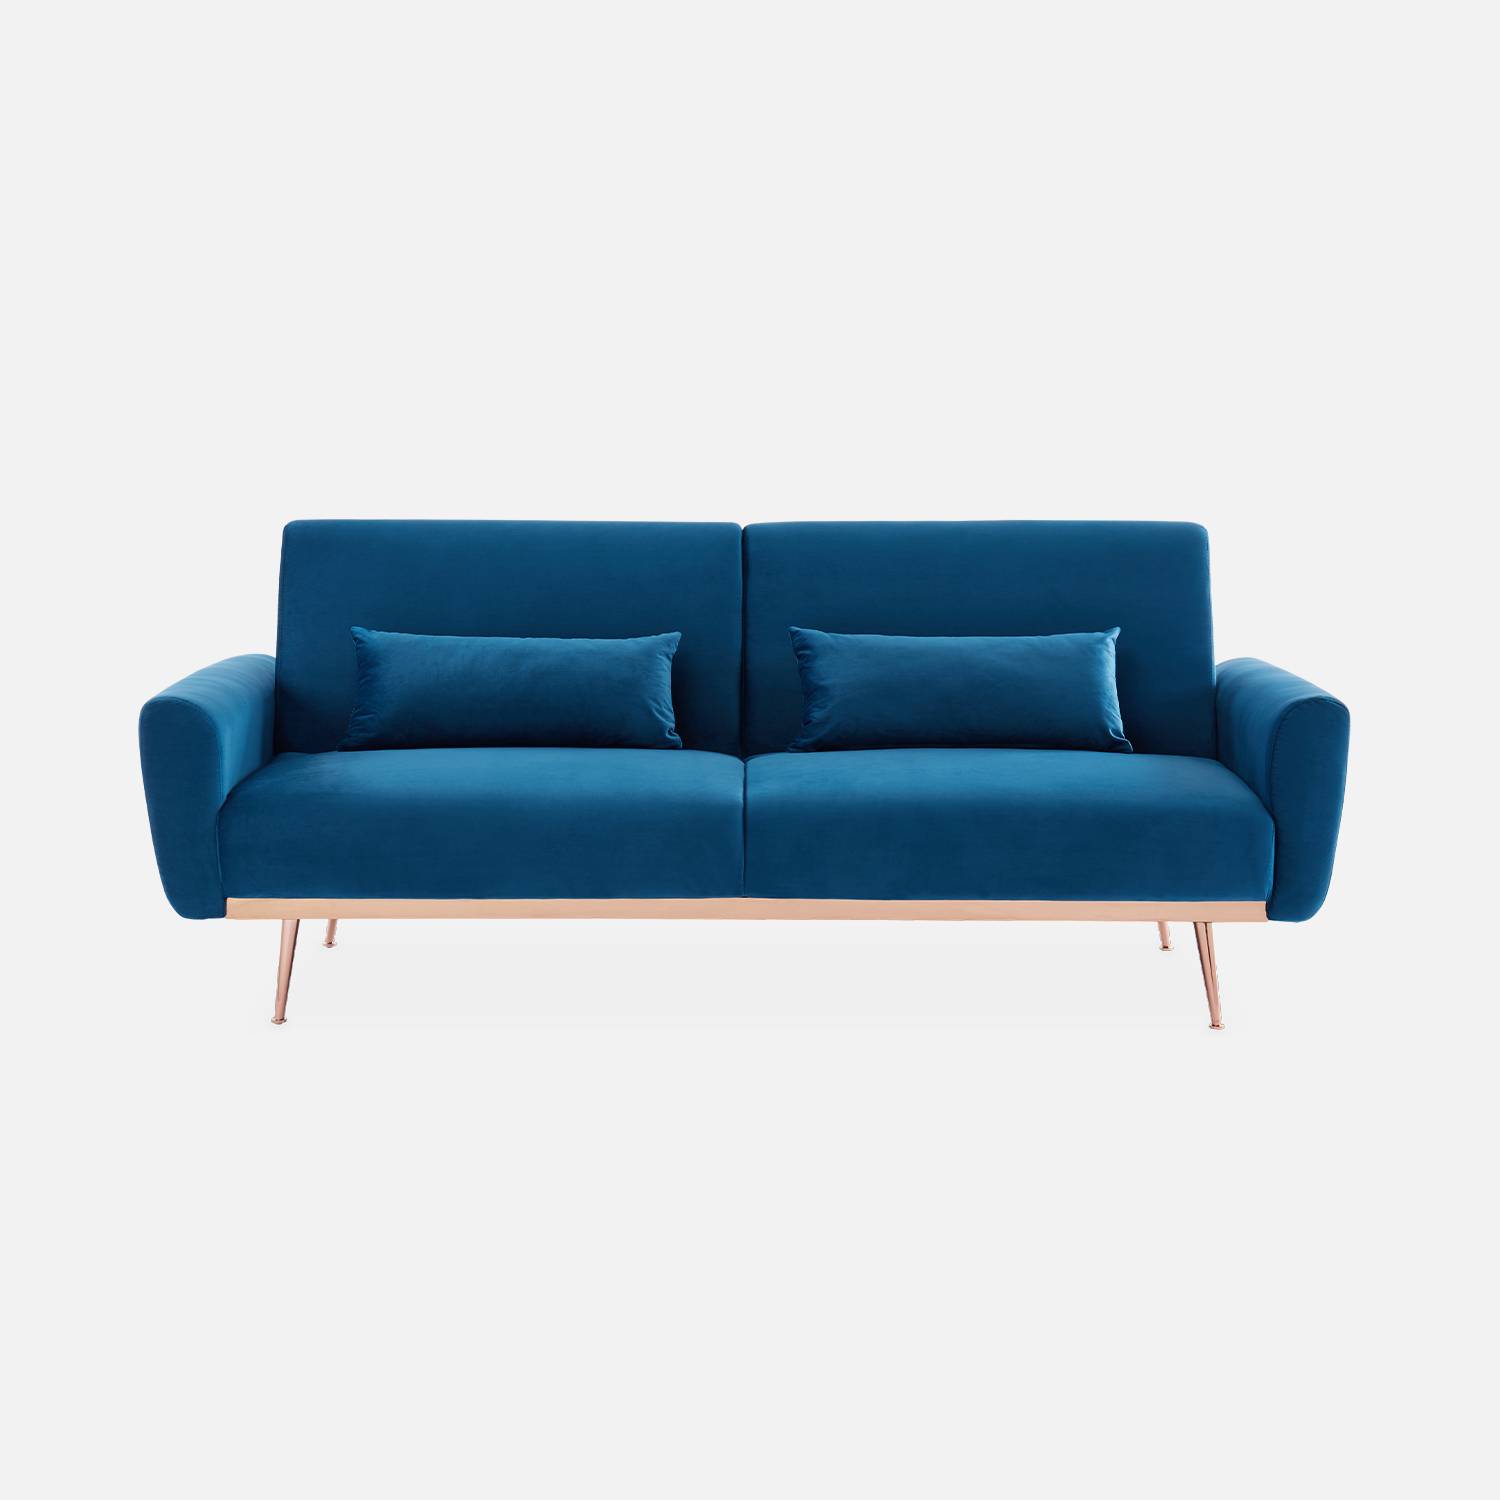 Design Sofa ausziehbar aus Samt - Oskar - 2 - 3 Sitzer skandinavischischer Stil mit dünnen roségoldenen Beinen Photo4